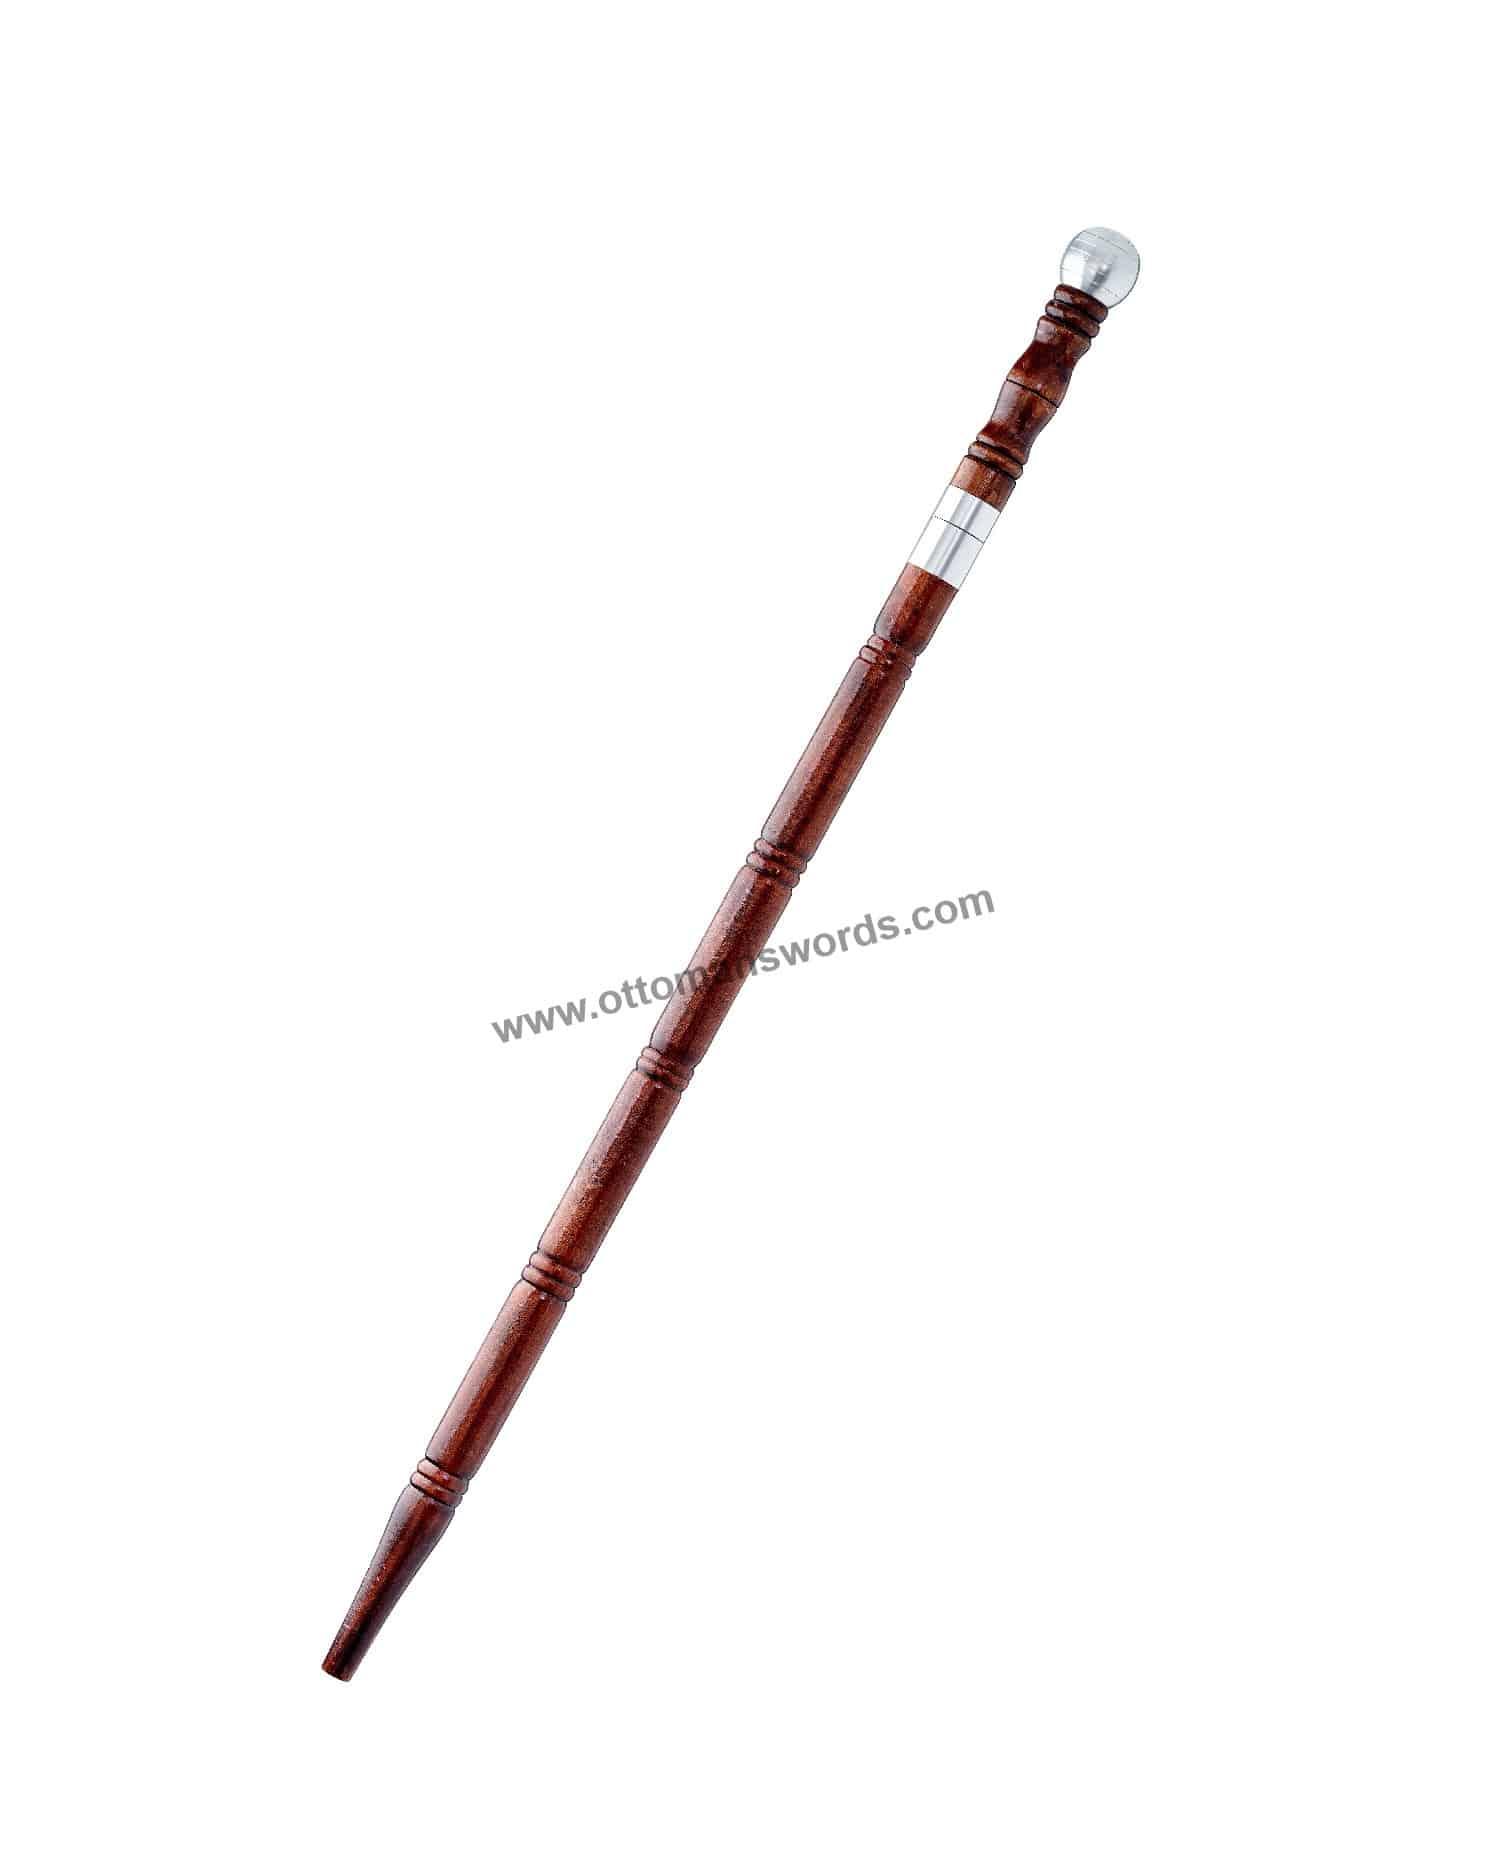 Sword cane online (2)